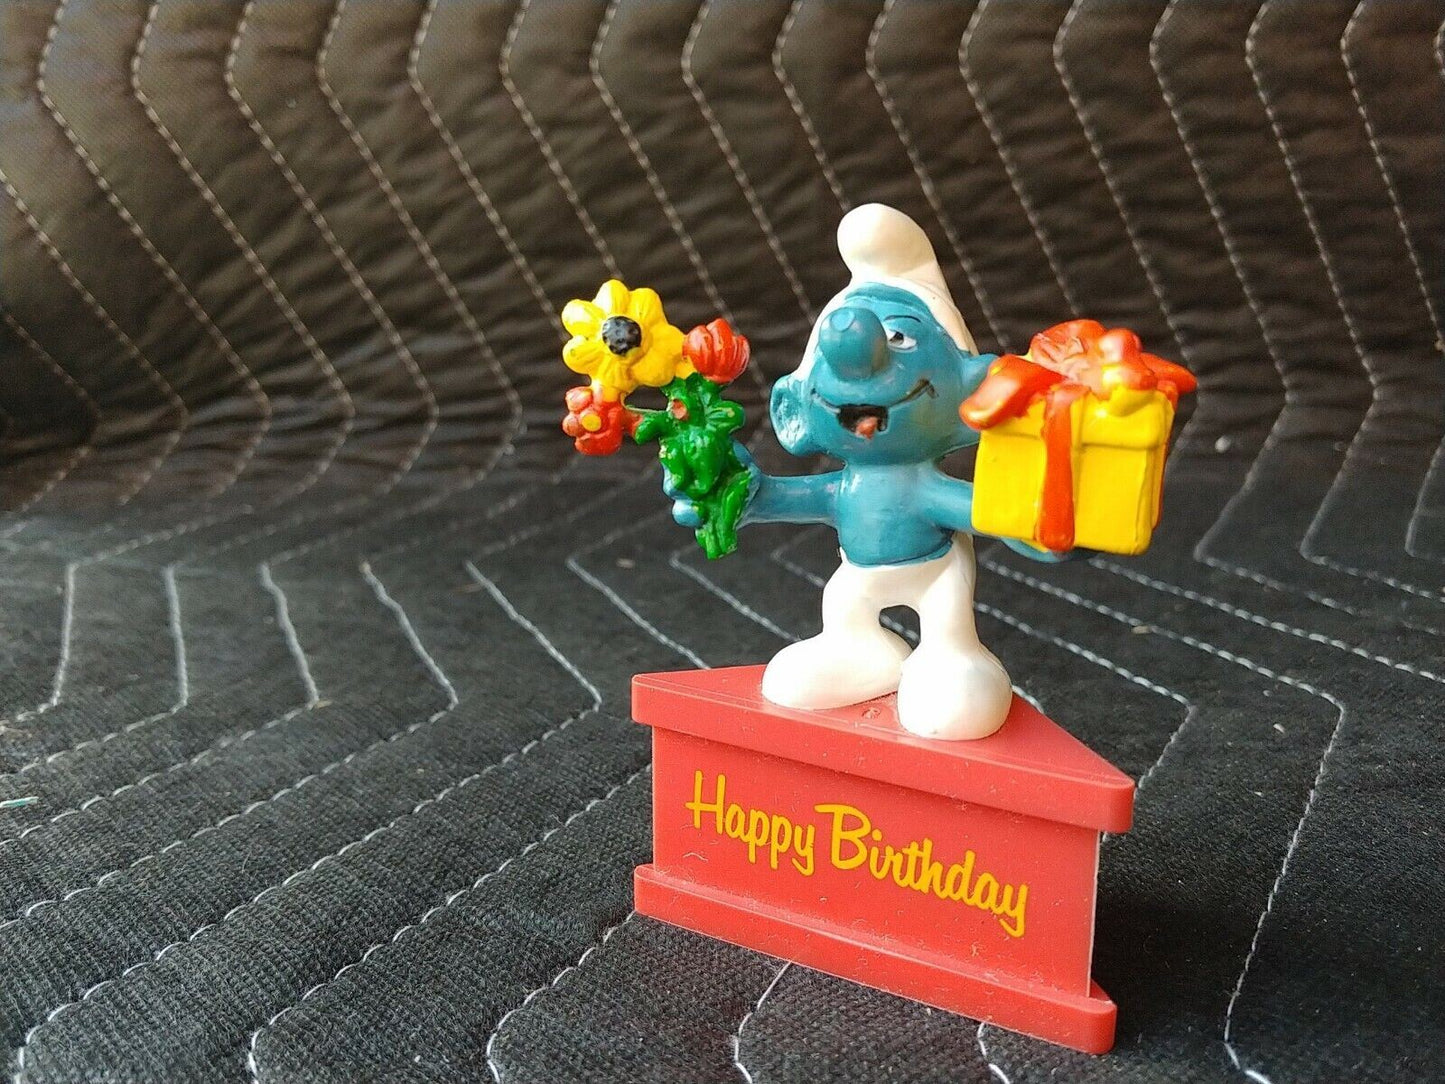 Happy Birthday Smurf Schleich Peyo Made in Hong Kong Wallace Bernie Co. Inc.